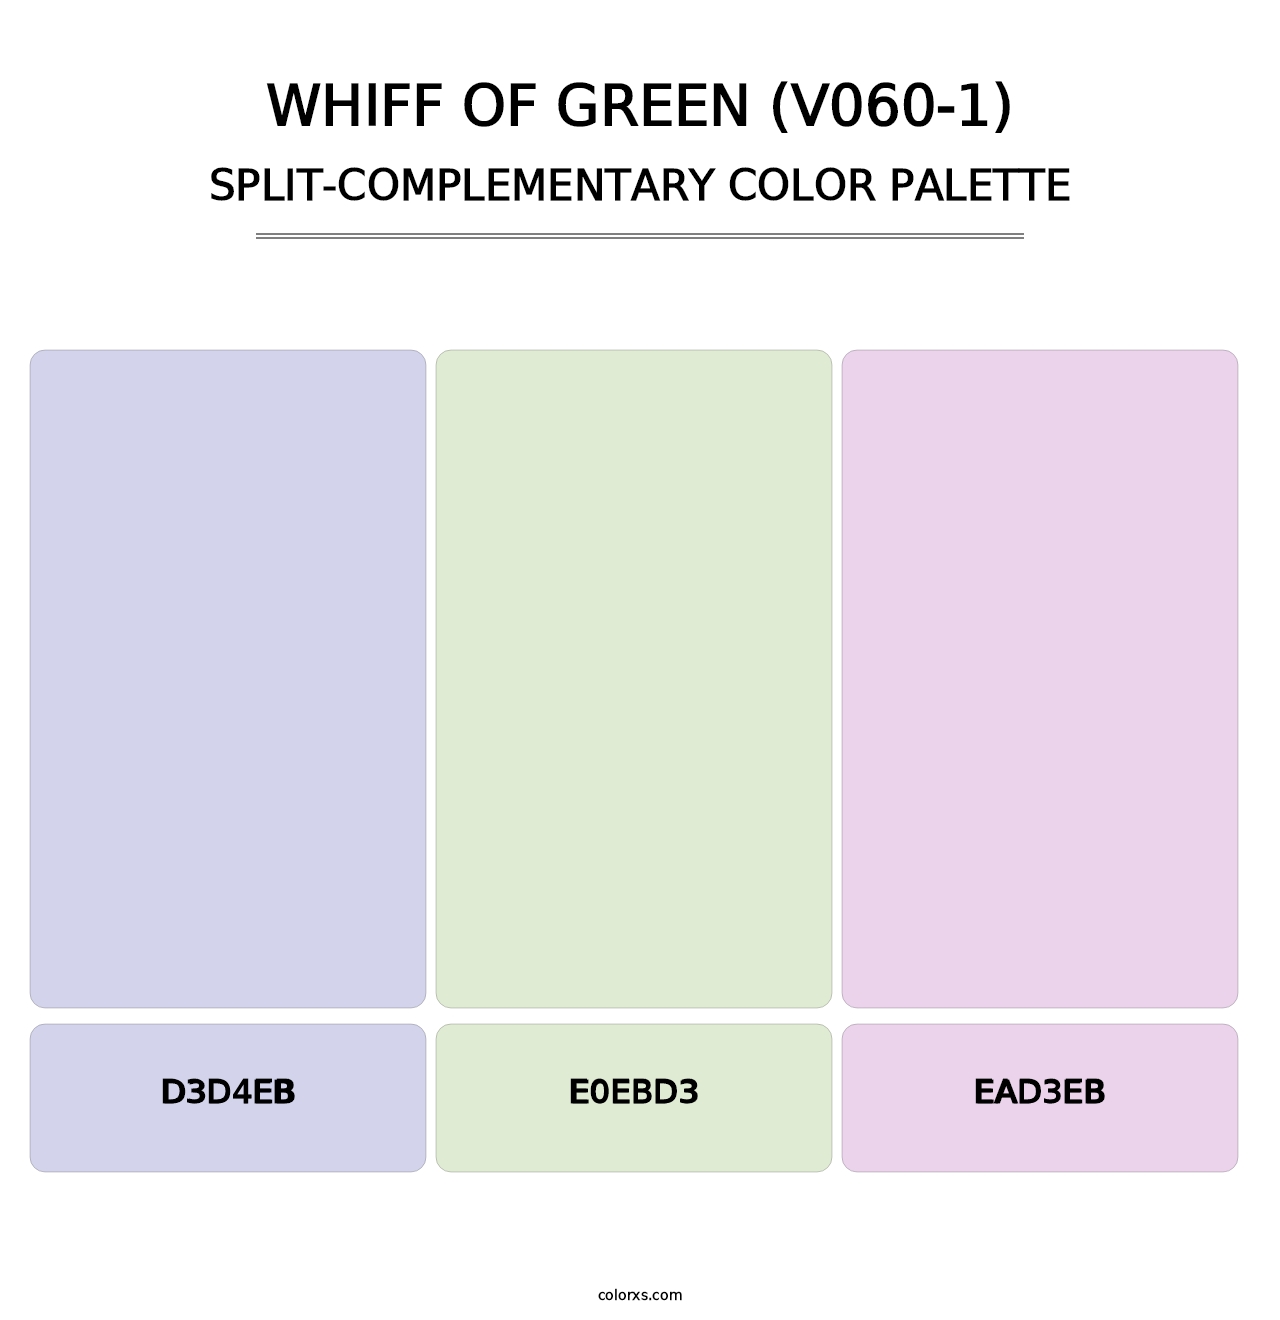 Whiff of Green (V060-1) - Split-Complementary Color Palette